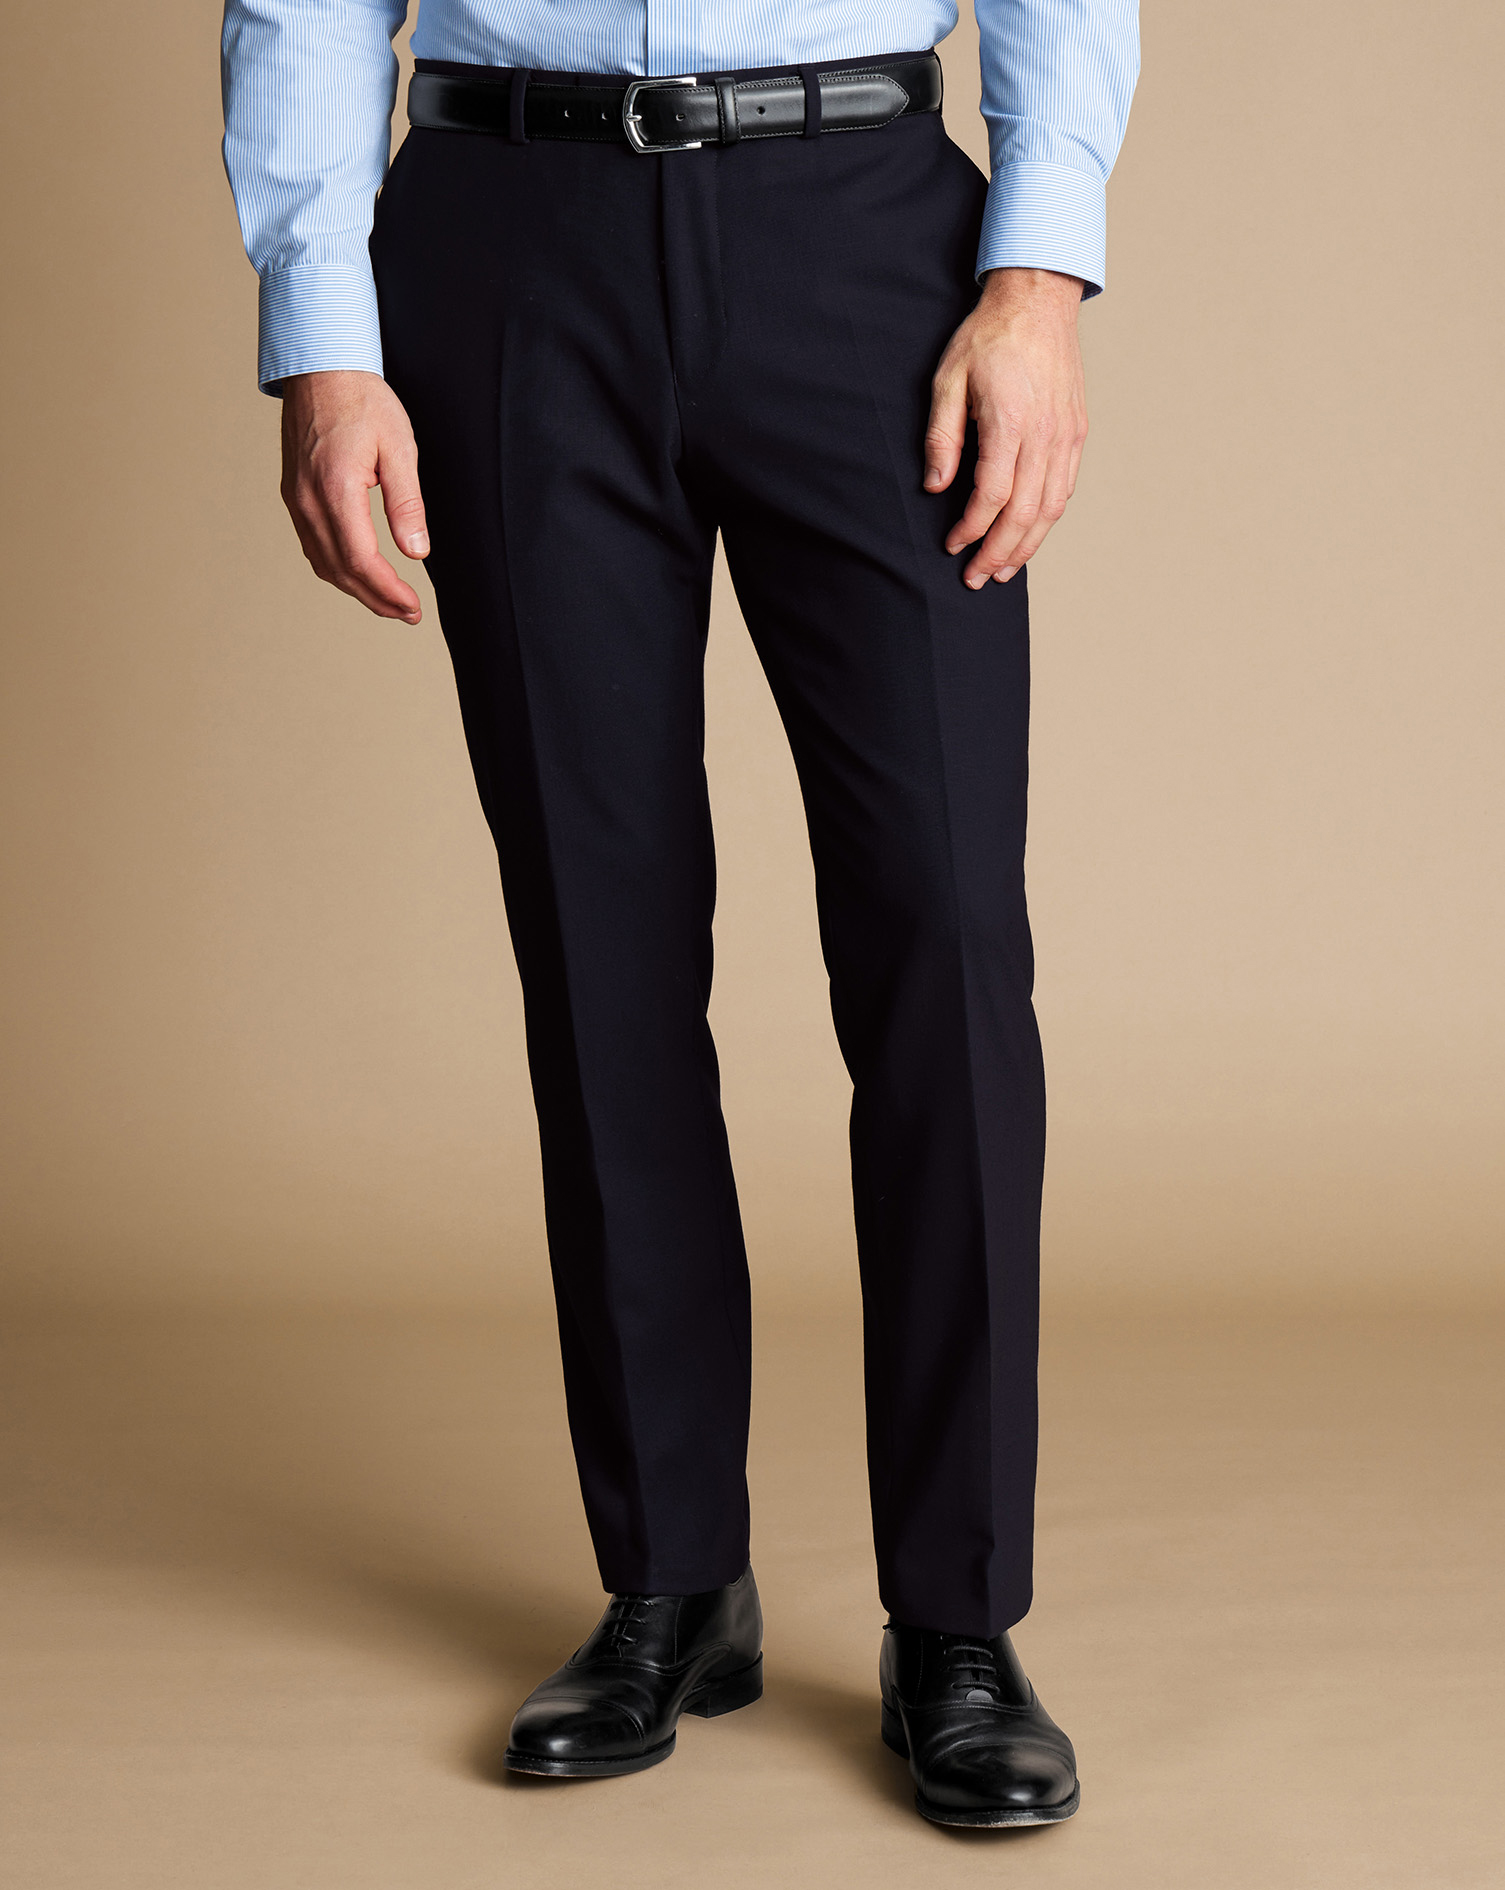 Men's Charles Tyrwhitt Ultimate Performance Suit Trousers - Dark Navy Blue Size 36/38 Wool
